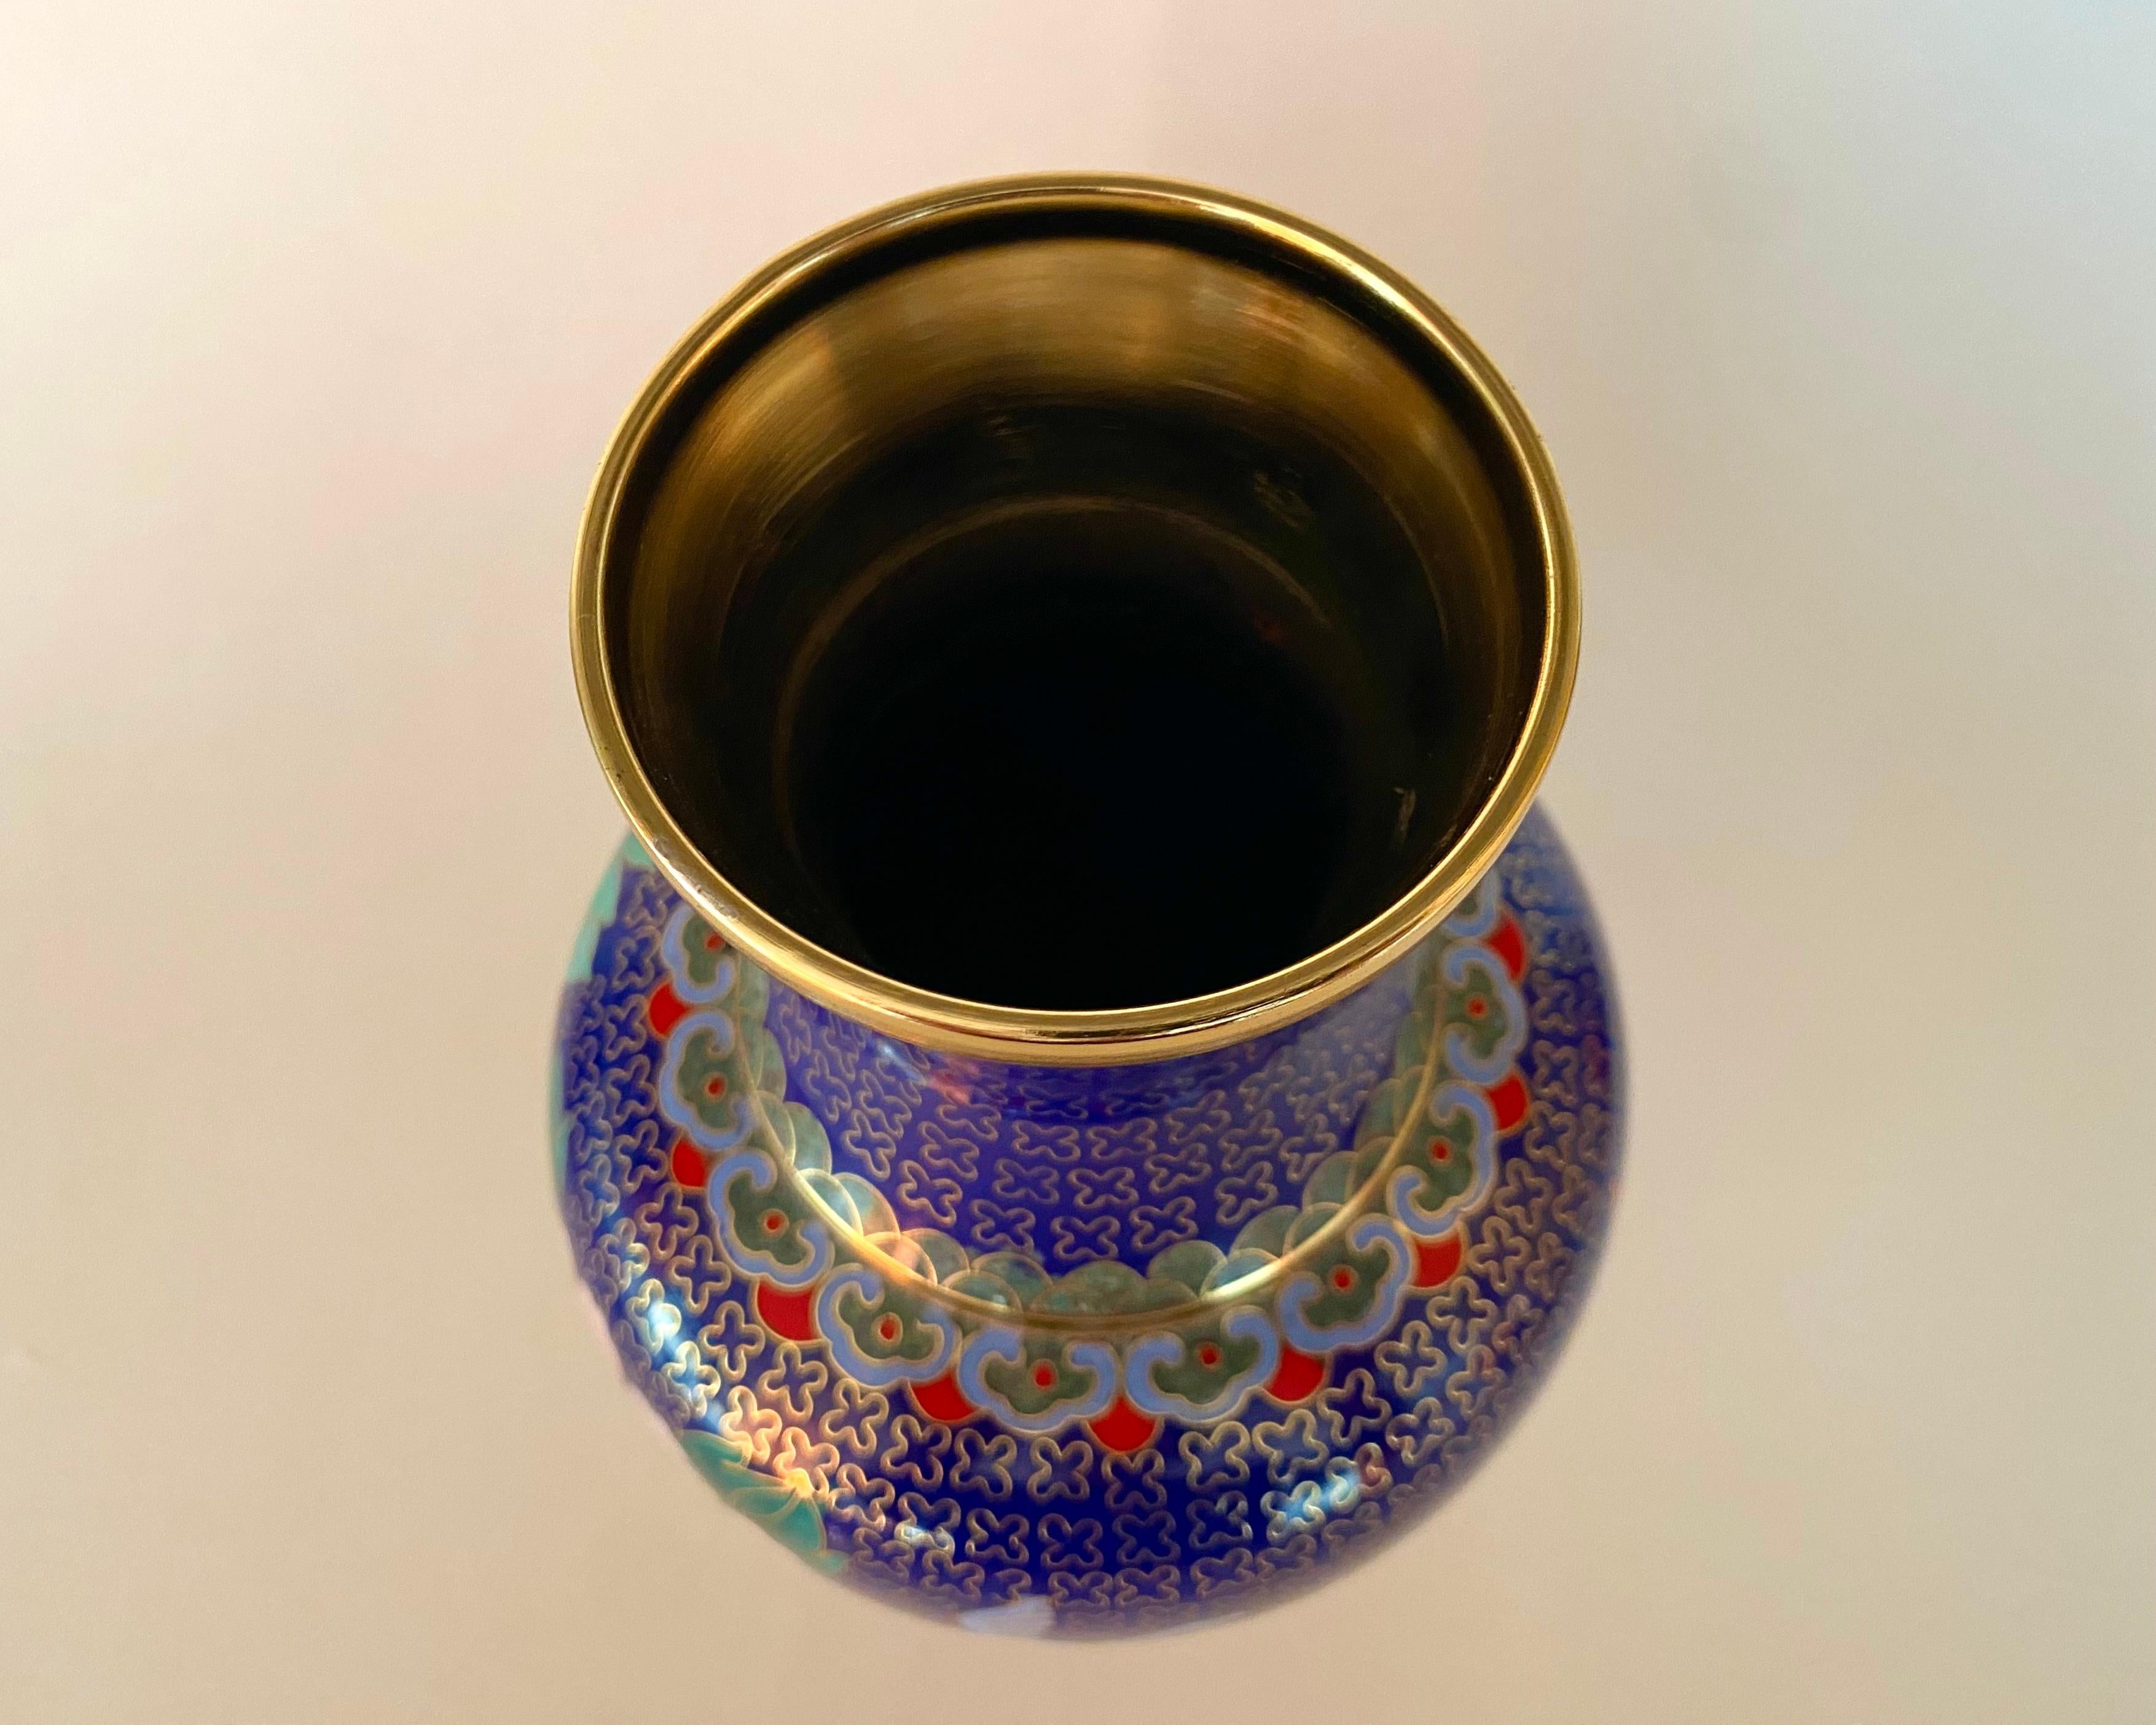 Vintage Enamel and Brass Vase in Cloisonné Technique, China, 1980 For Sale 1